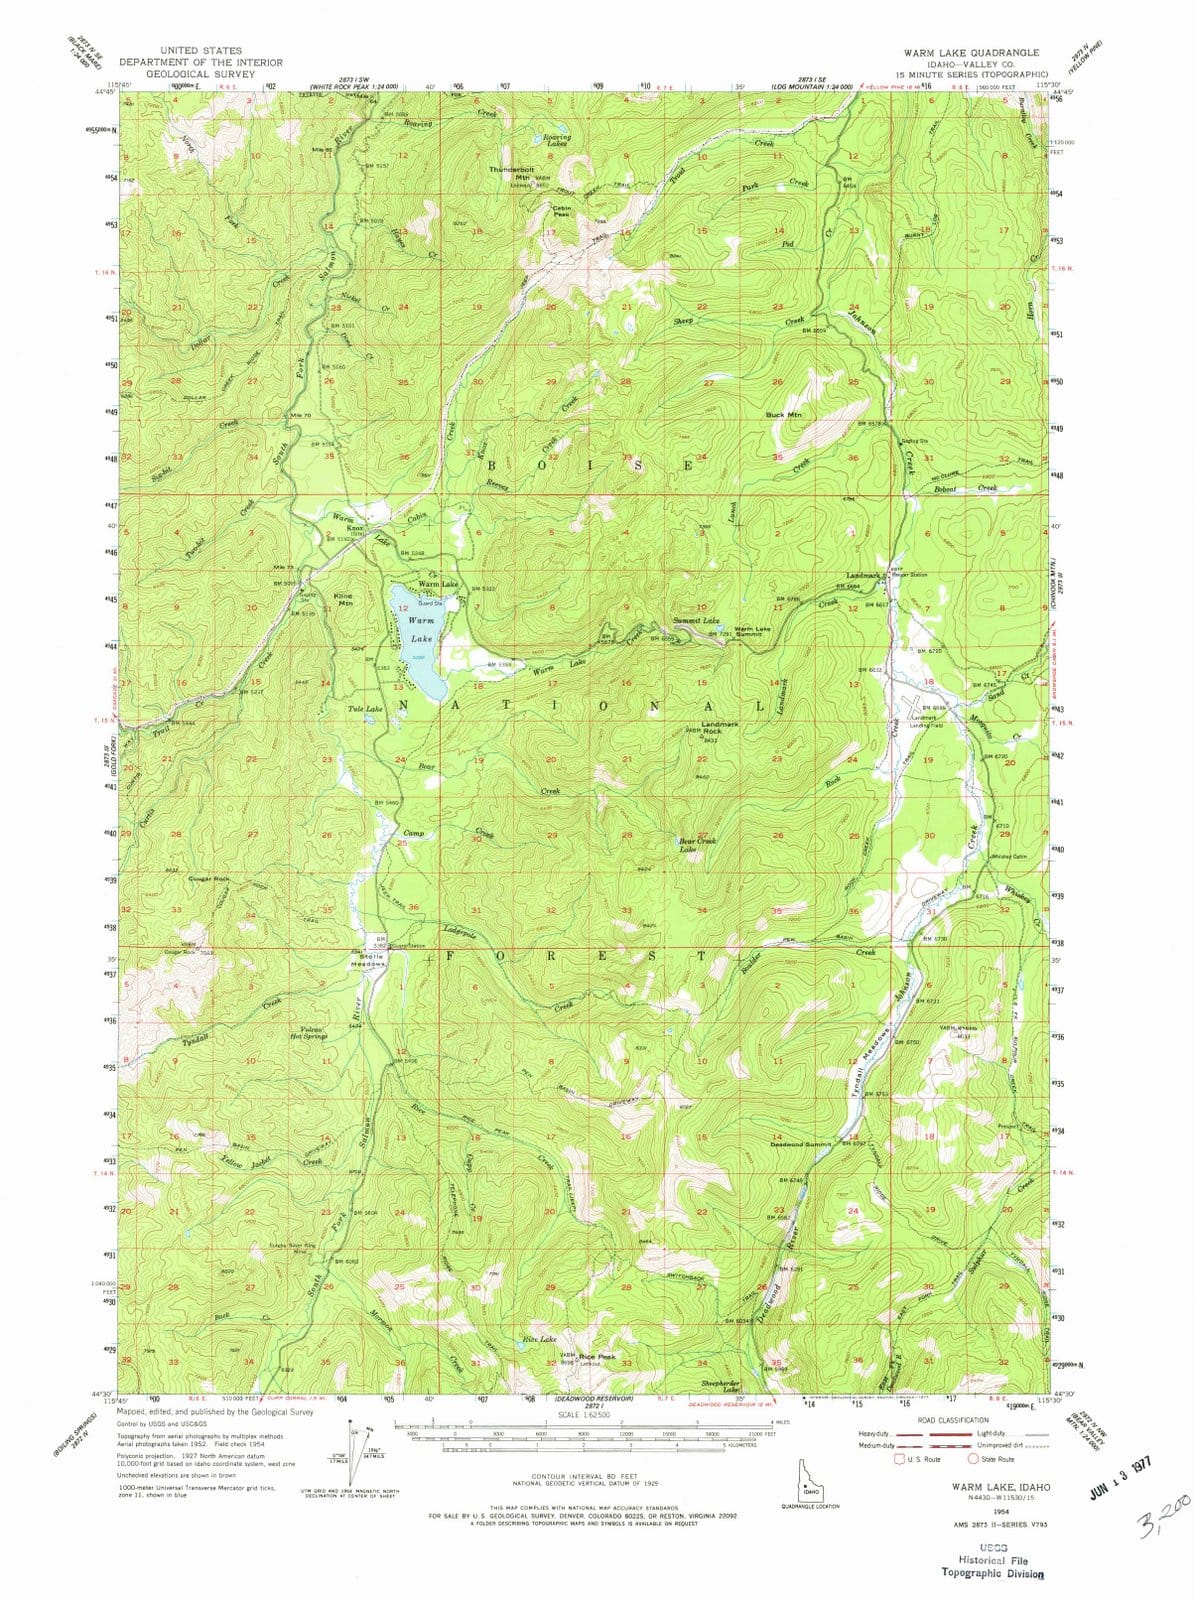 1954 Warm Lake, ID - Idaho - USGS Topographic Map